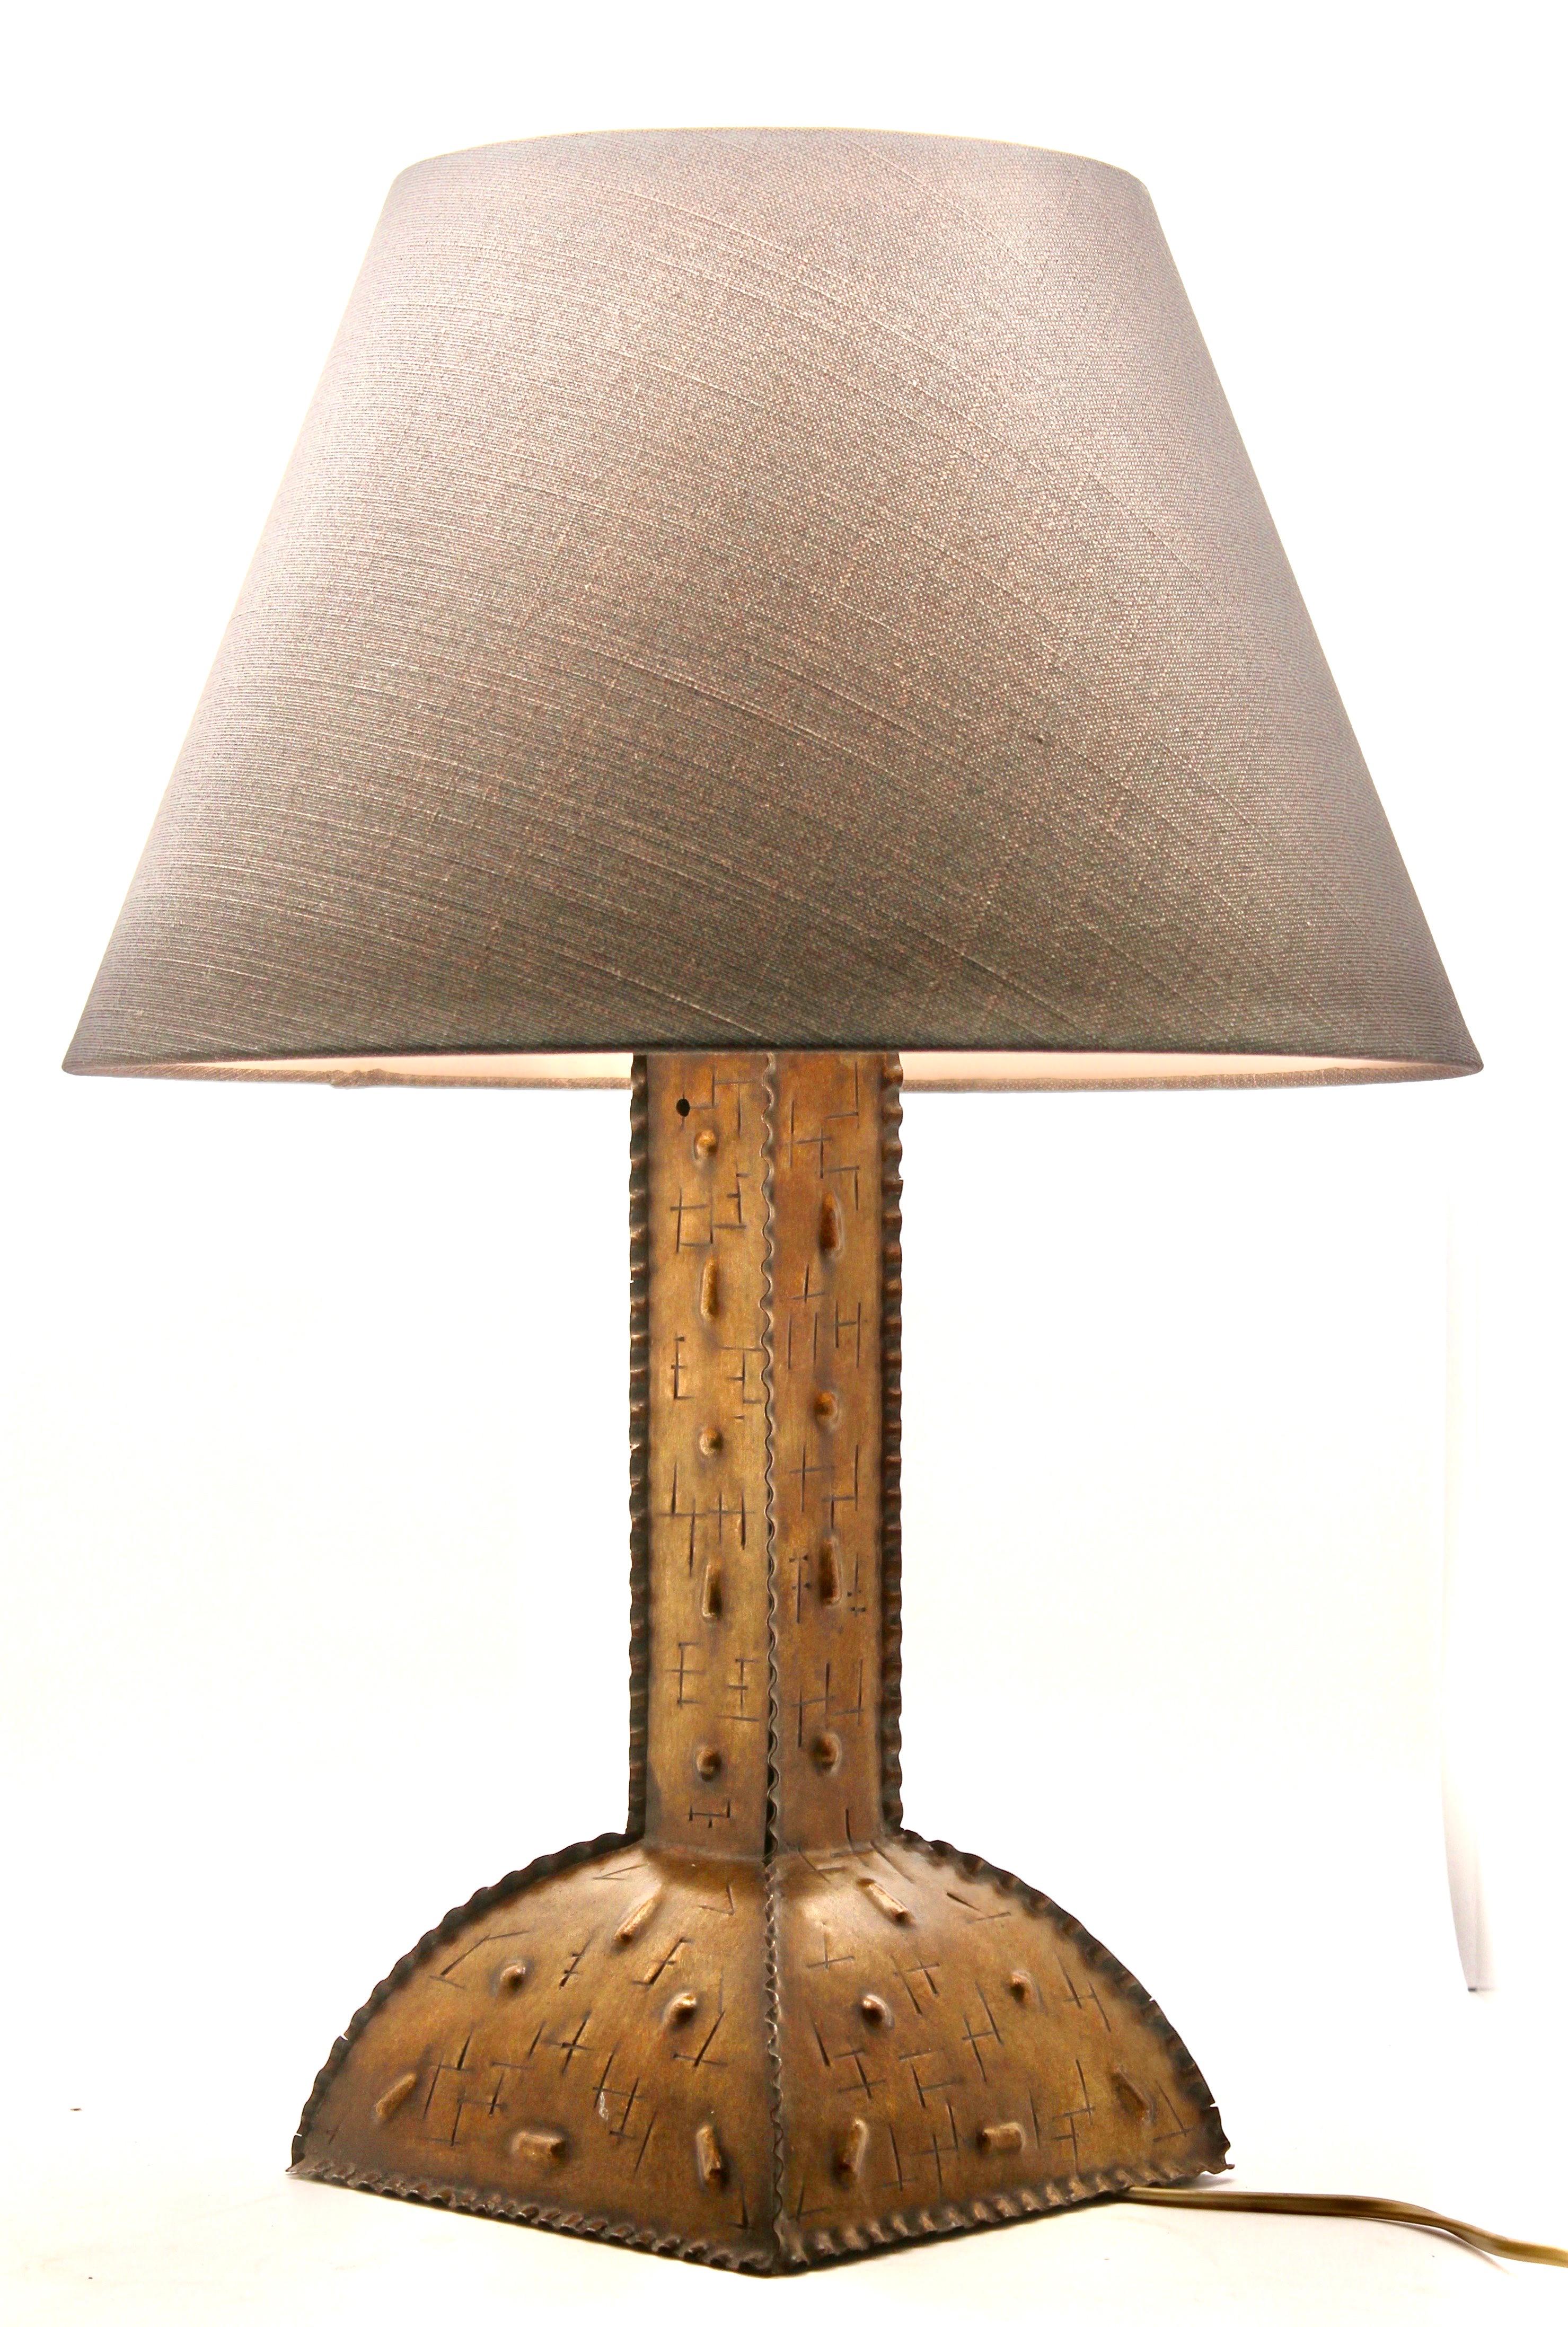 Brass Arts & Crafts, Beaten Copper Table Lamp with Original Patina, Handmade